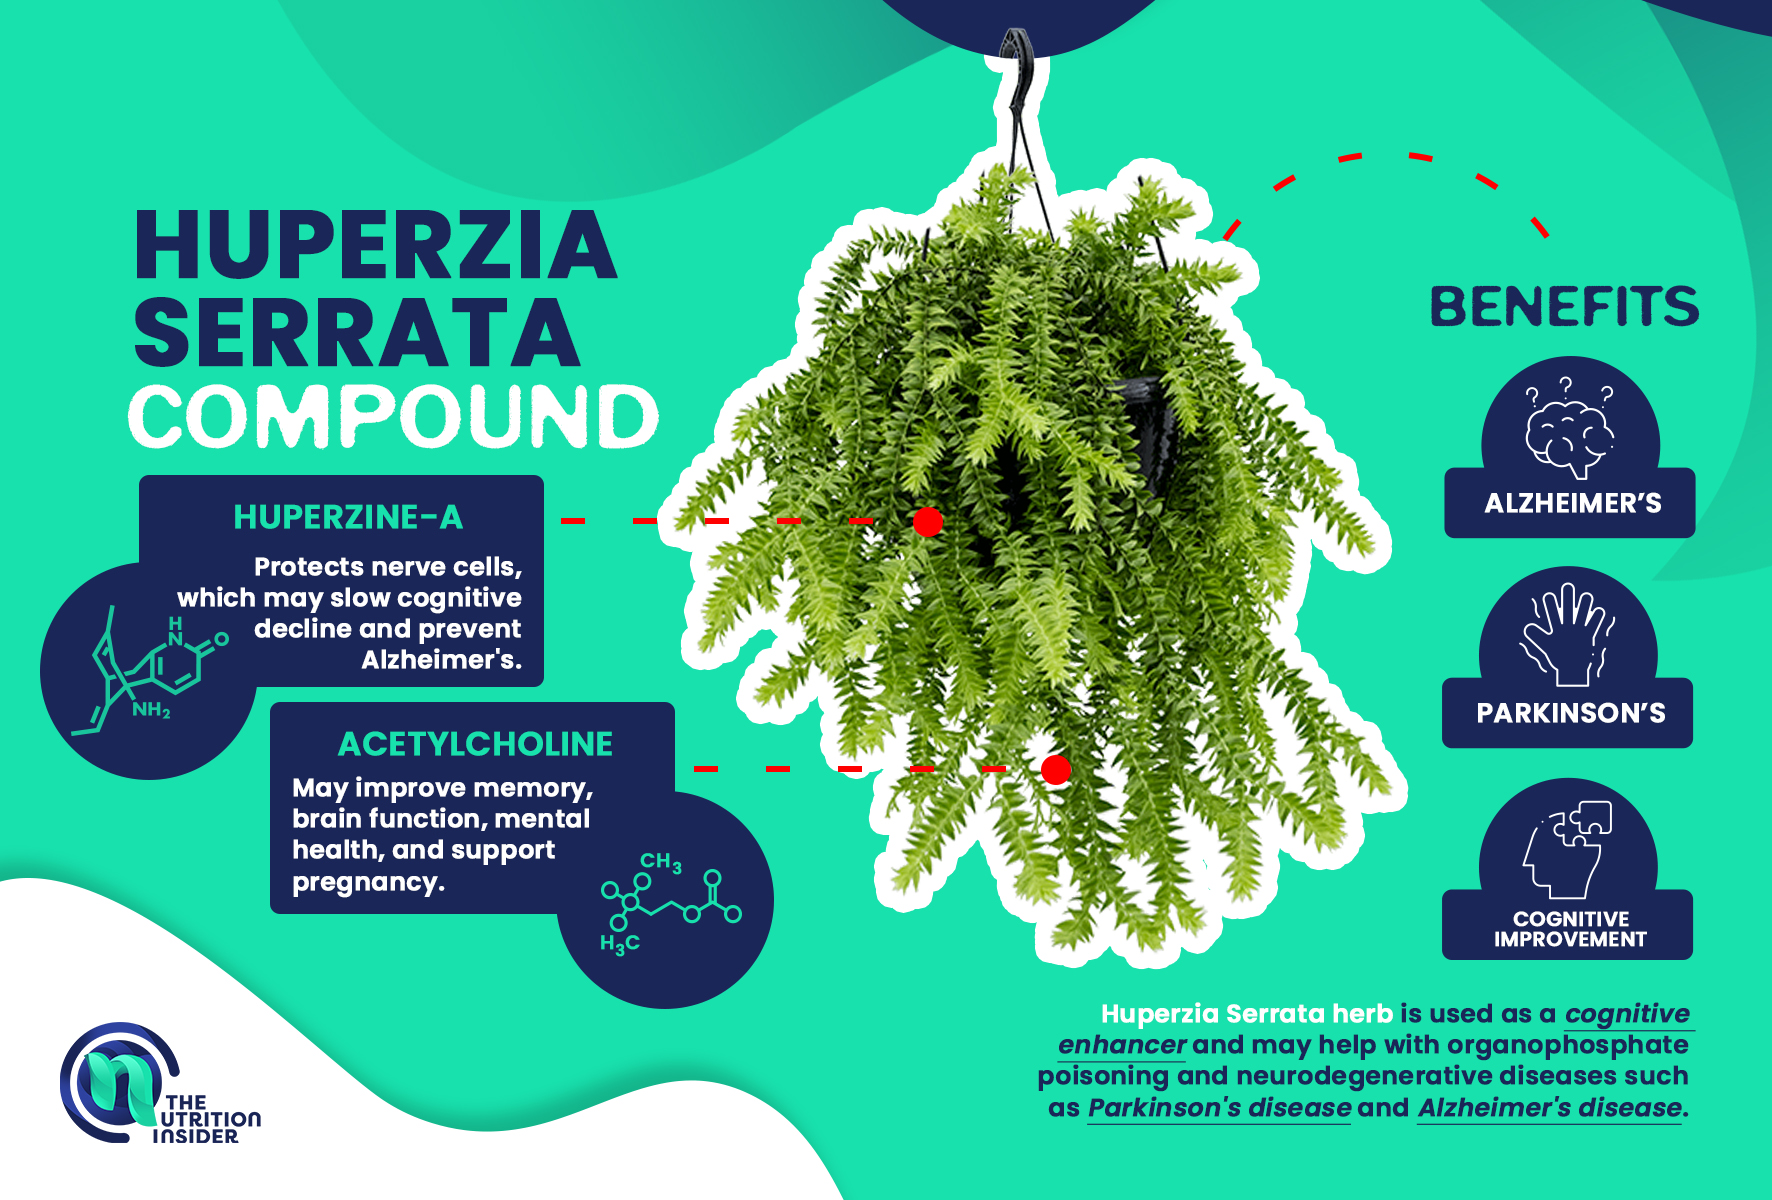 huperzia serrata compounds and benefits